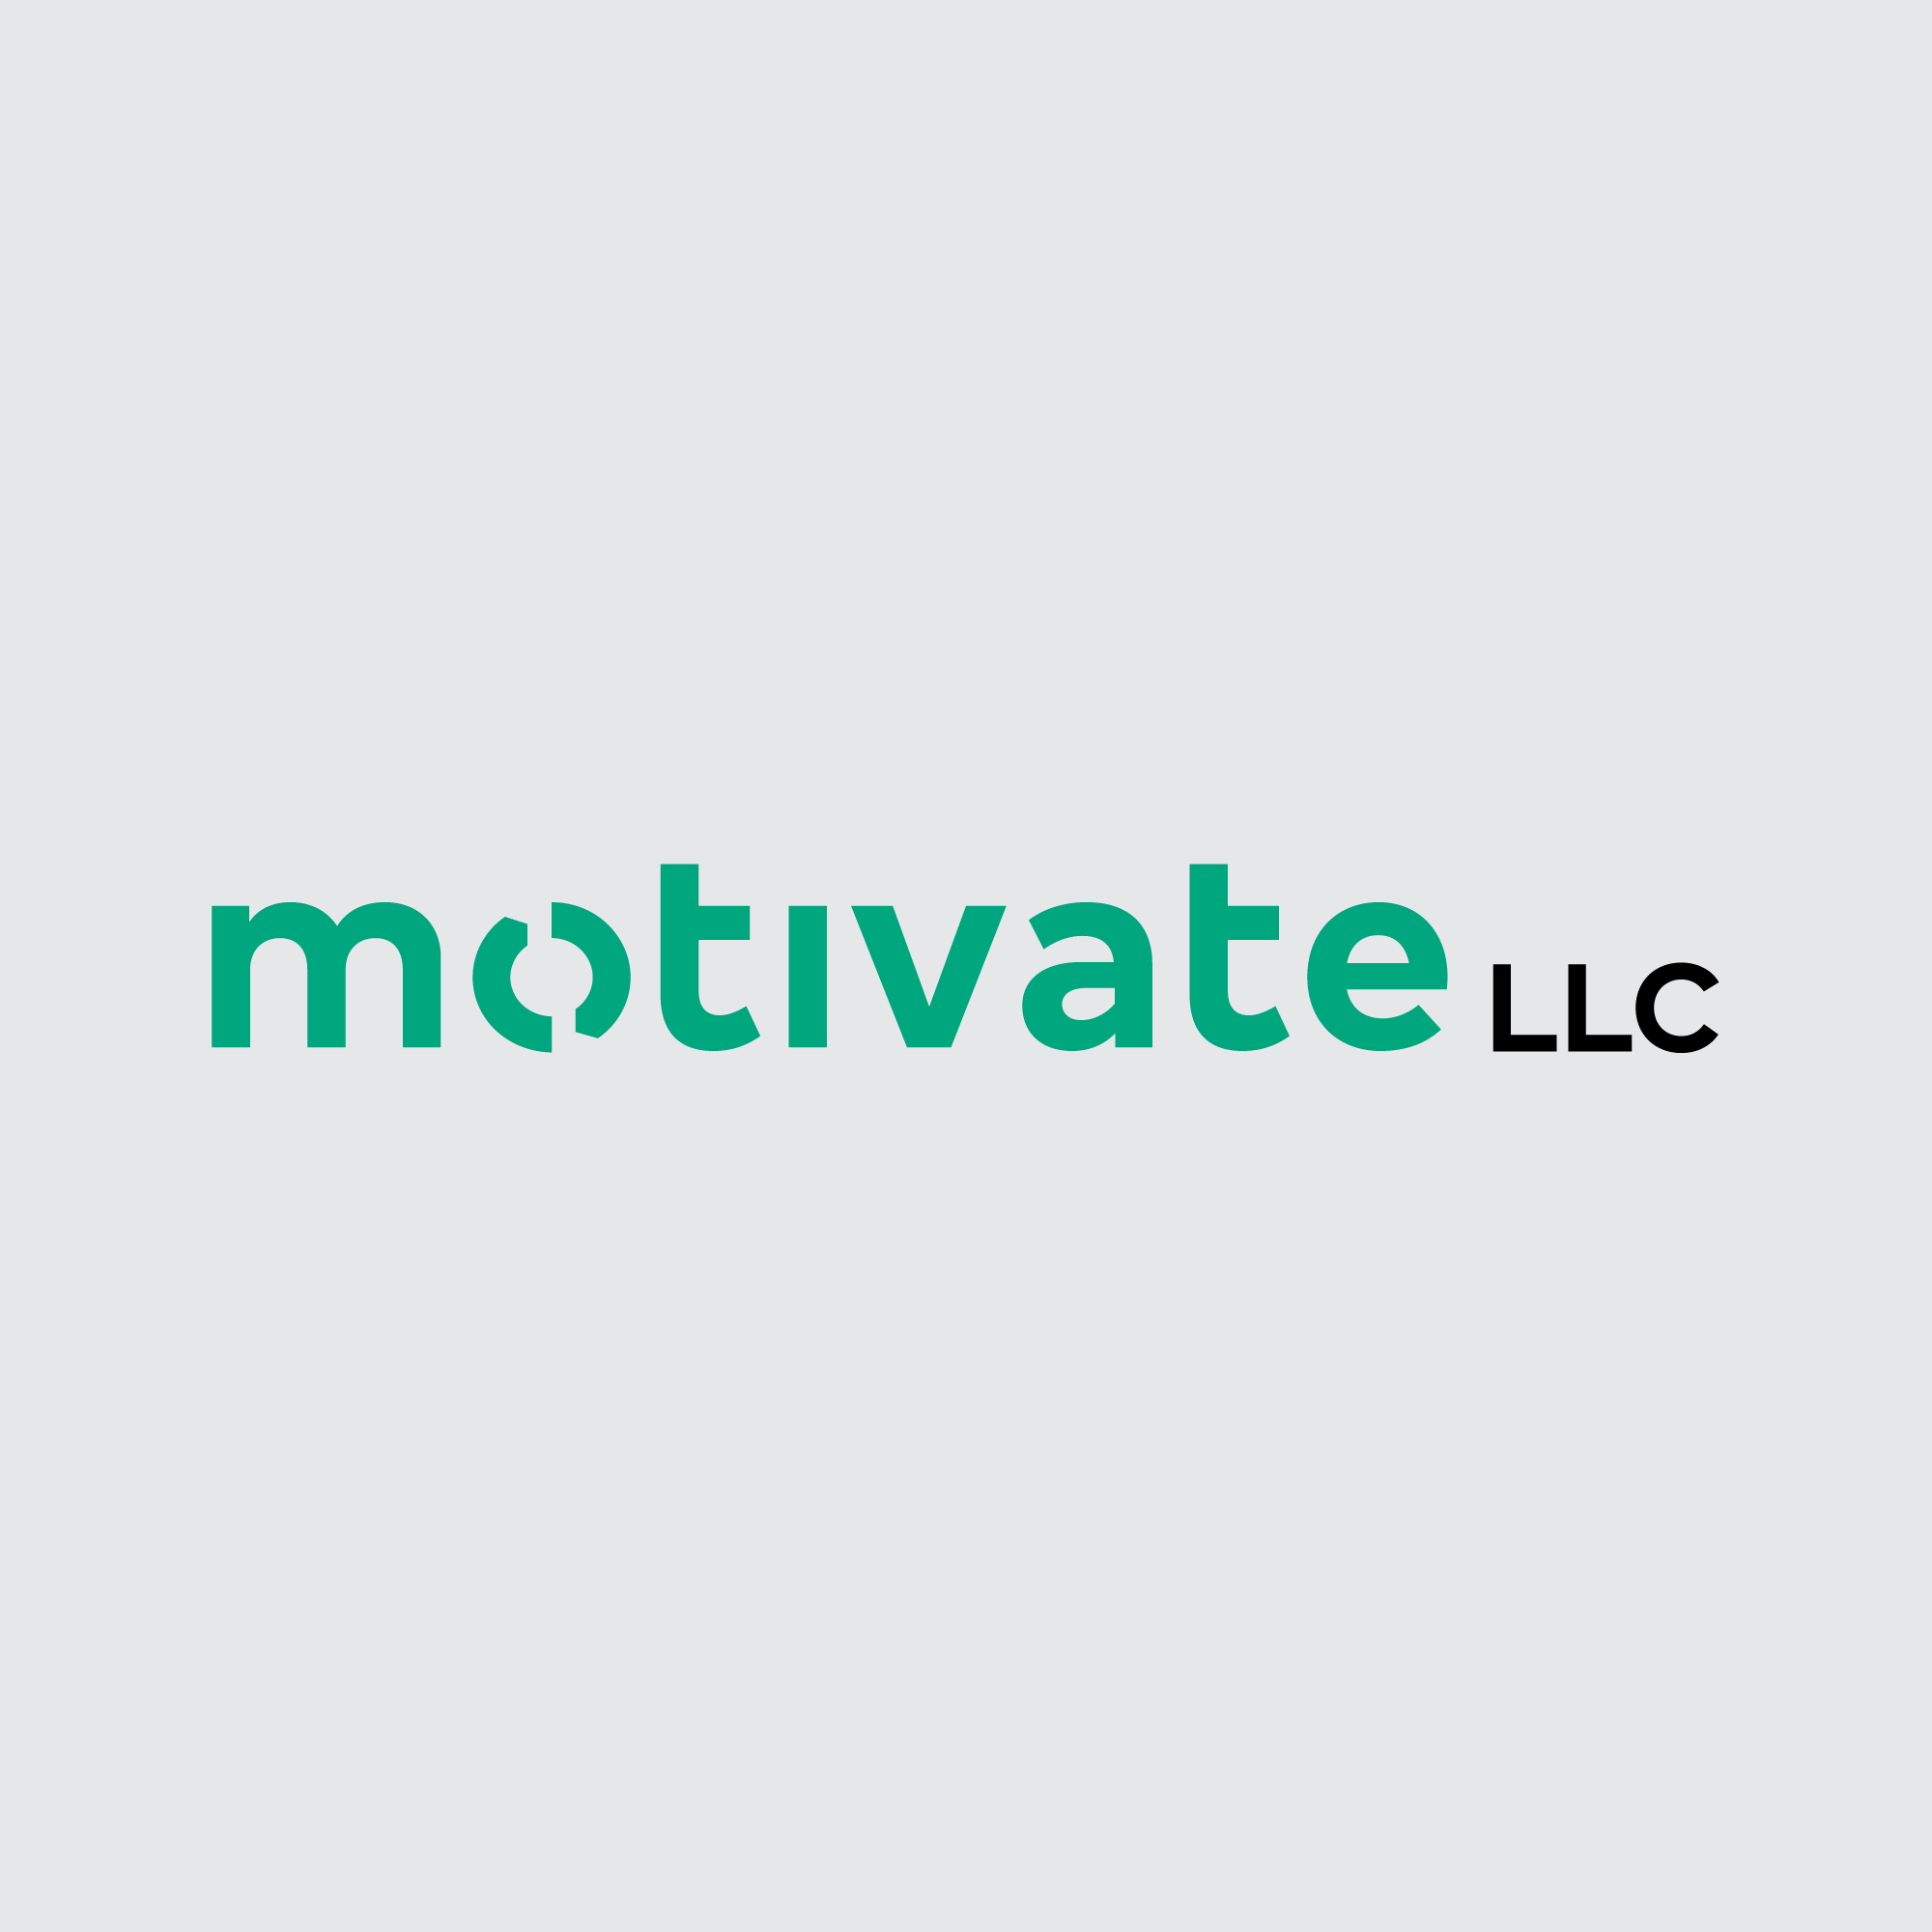 Motivate LLC